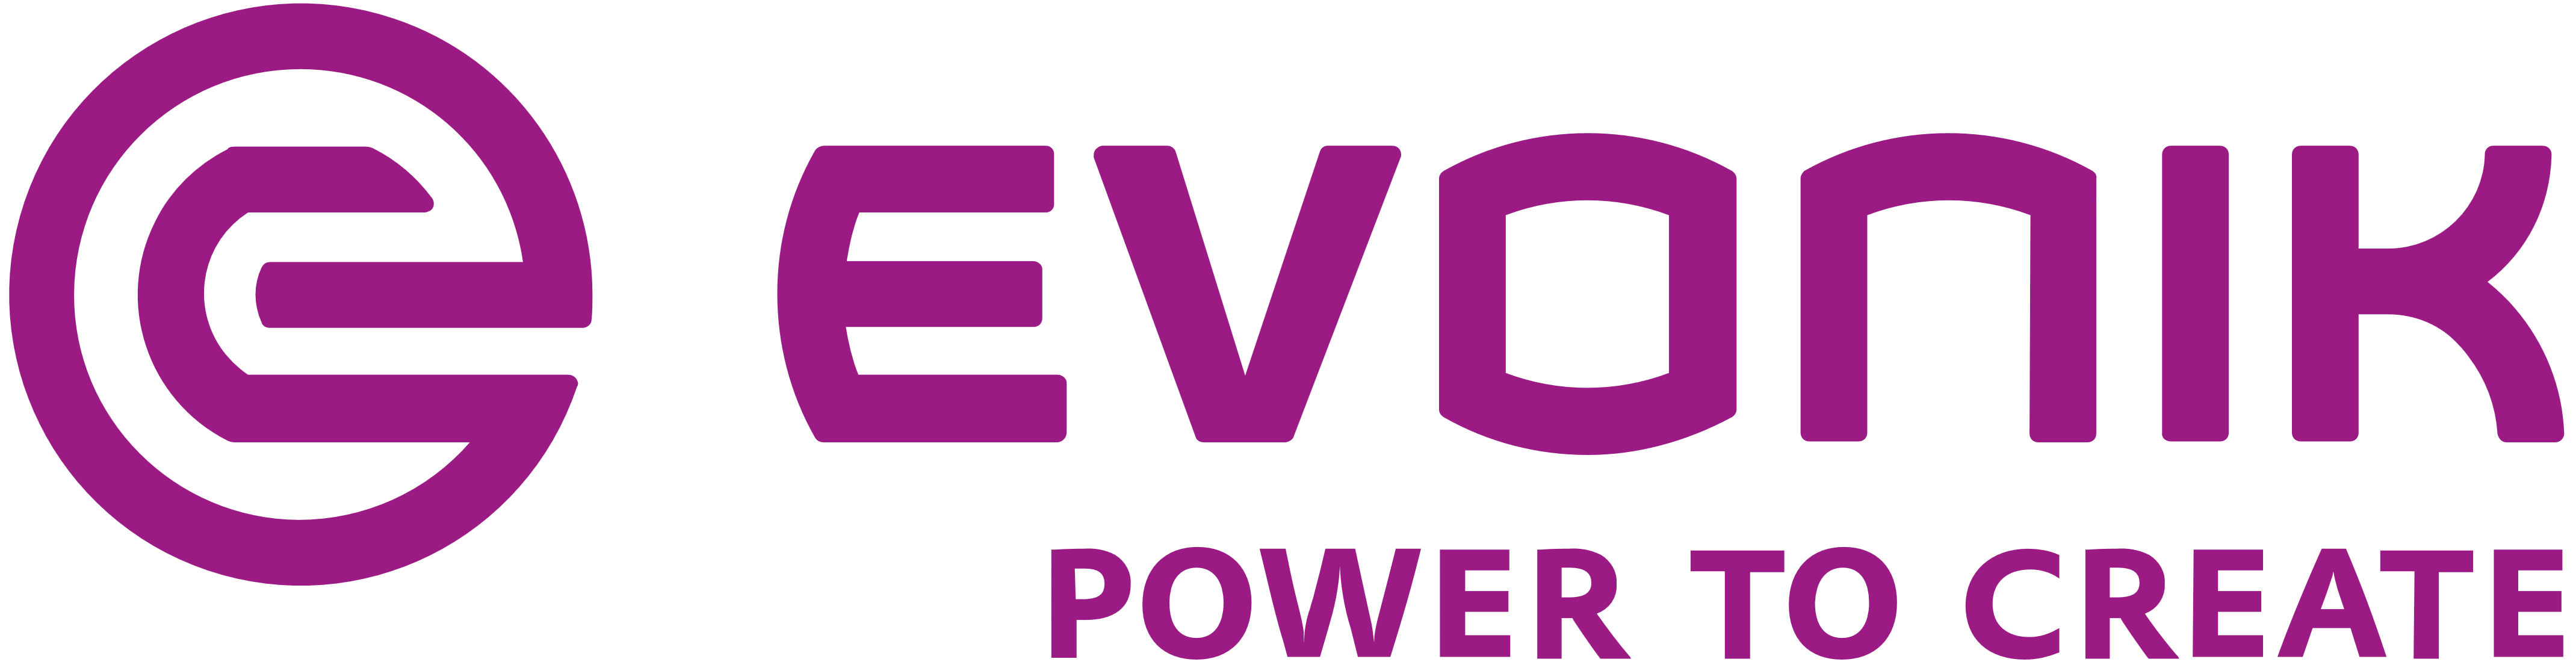 Evonik logo, logotype